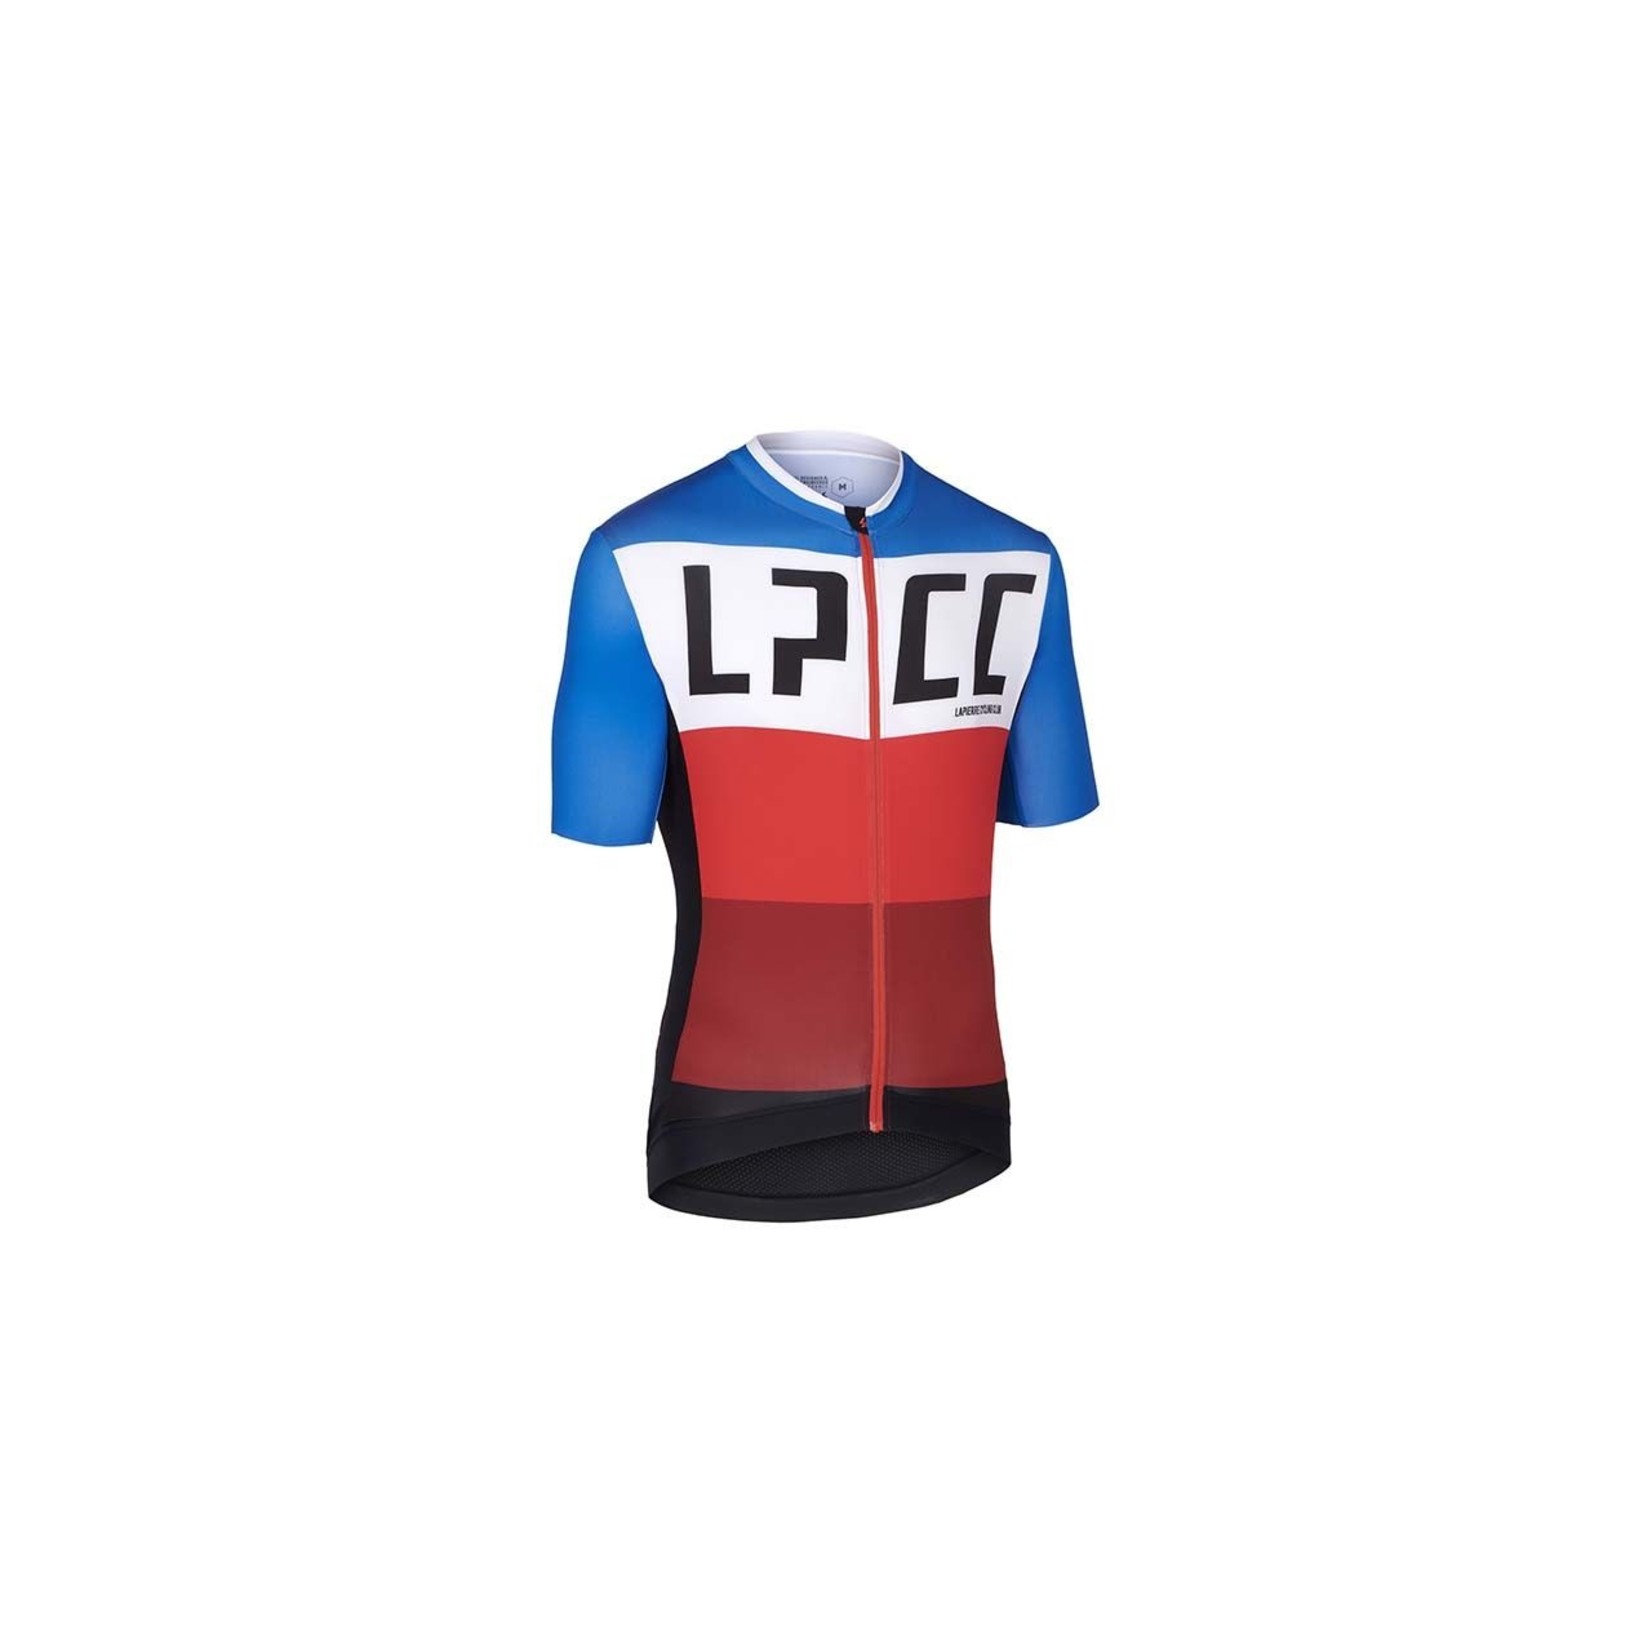 Lapierre Superlight So Frenchy Cycling Jersey Medium 2019